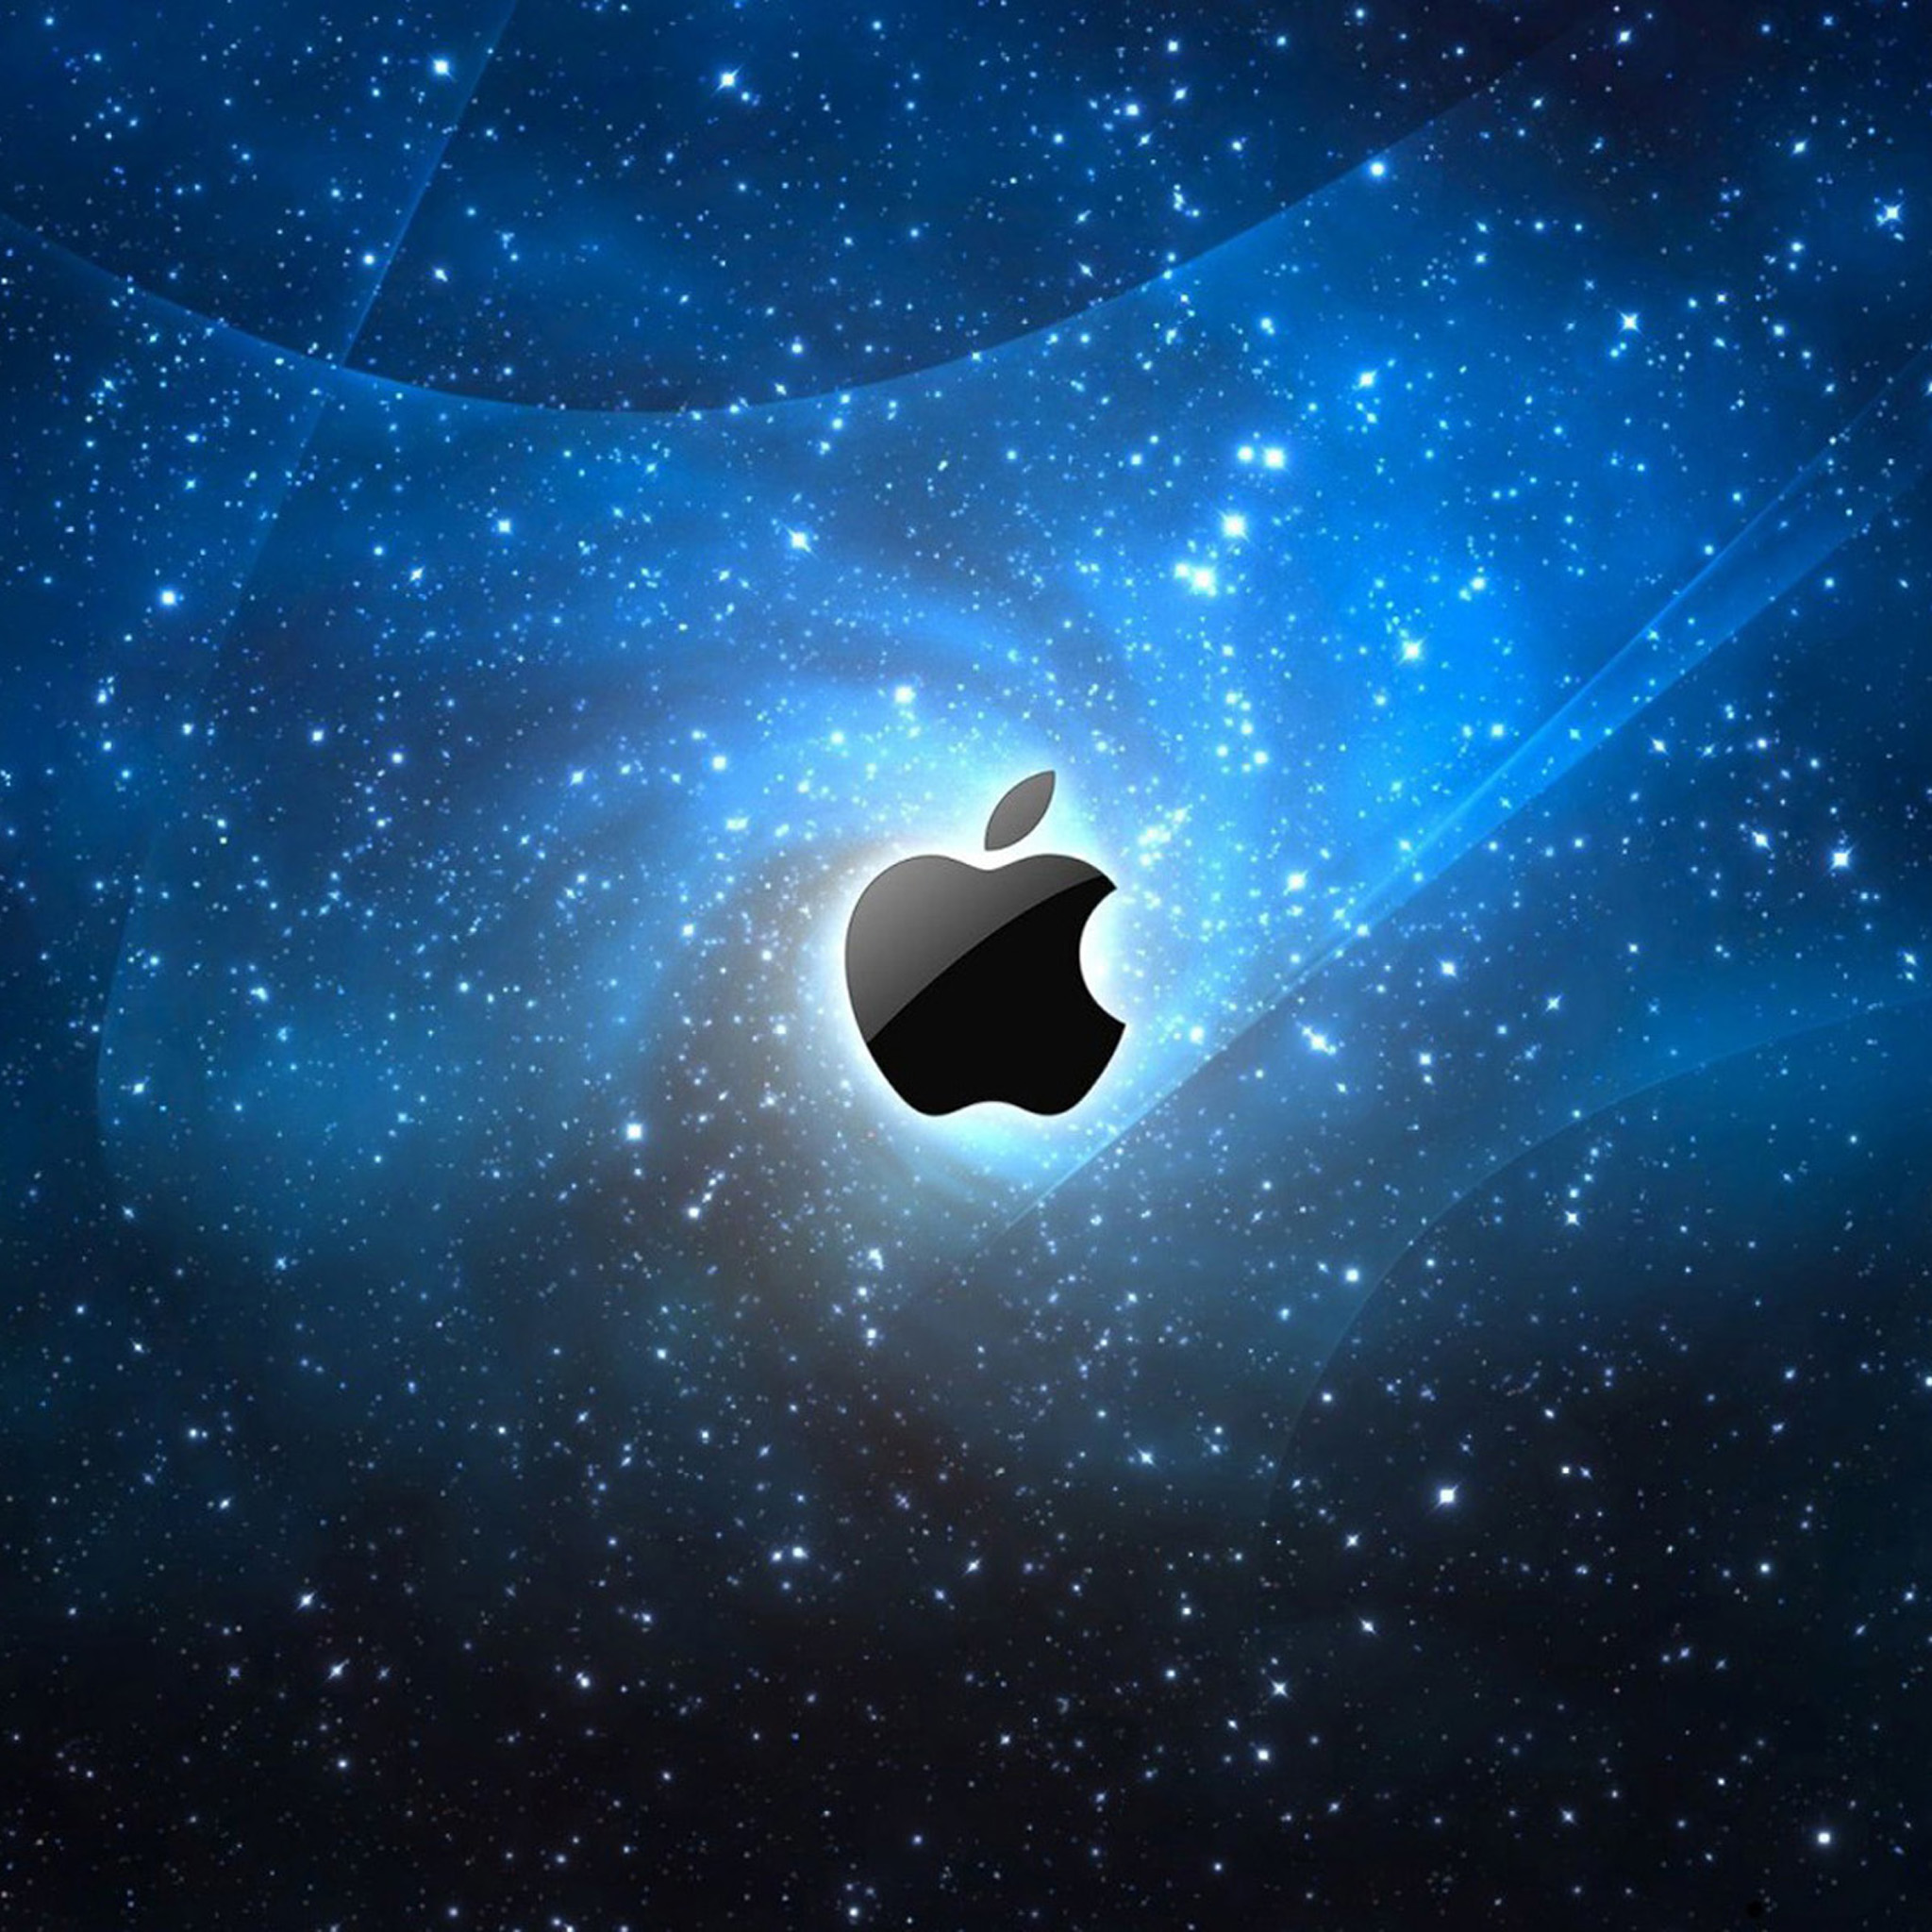 Space Apple iPad Air Wallpaper